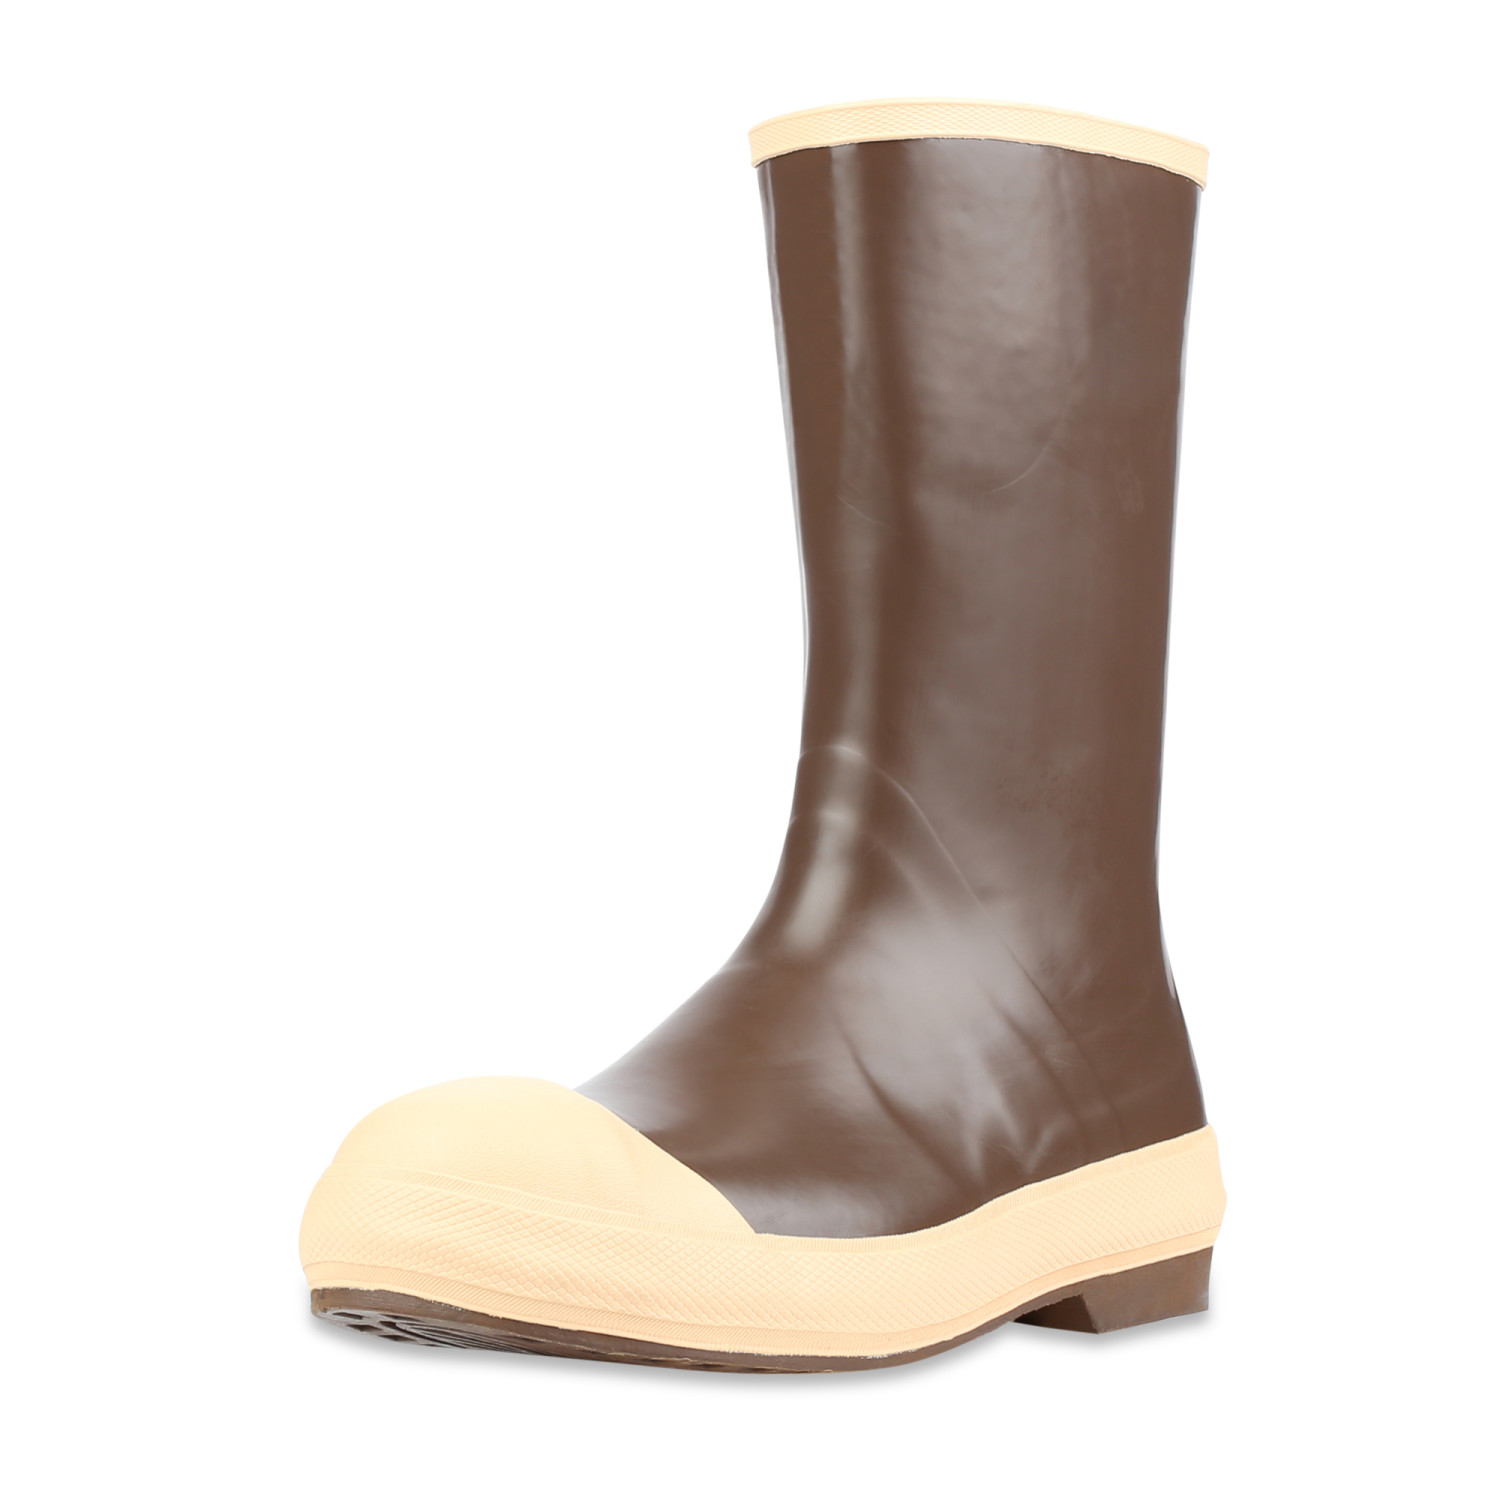 Servus 12 in Steel Toe Neoprene Safety Boot Size 11(M) - image 1 of 6